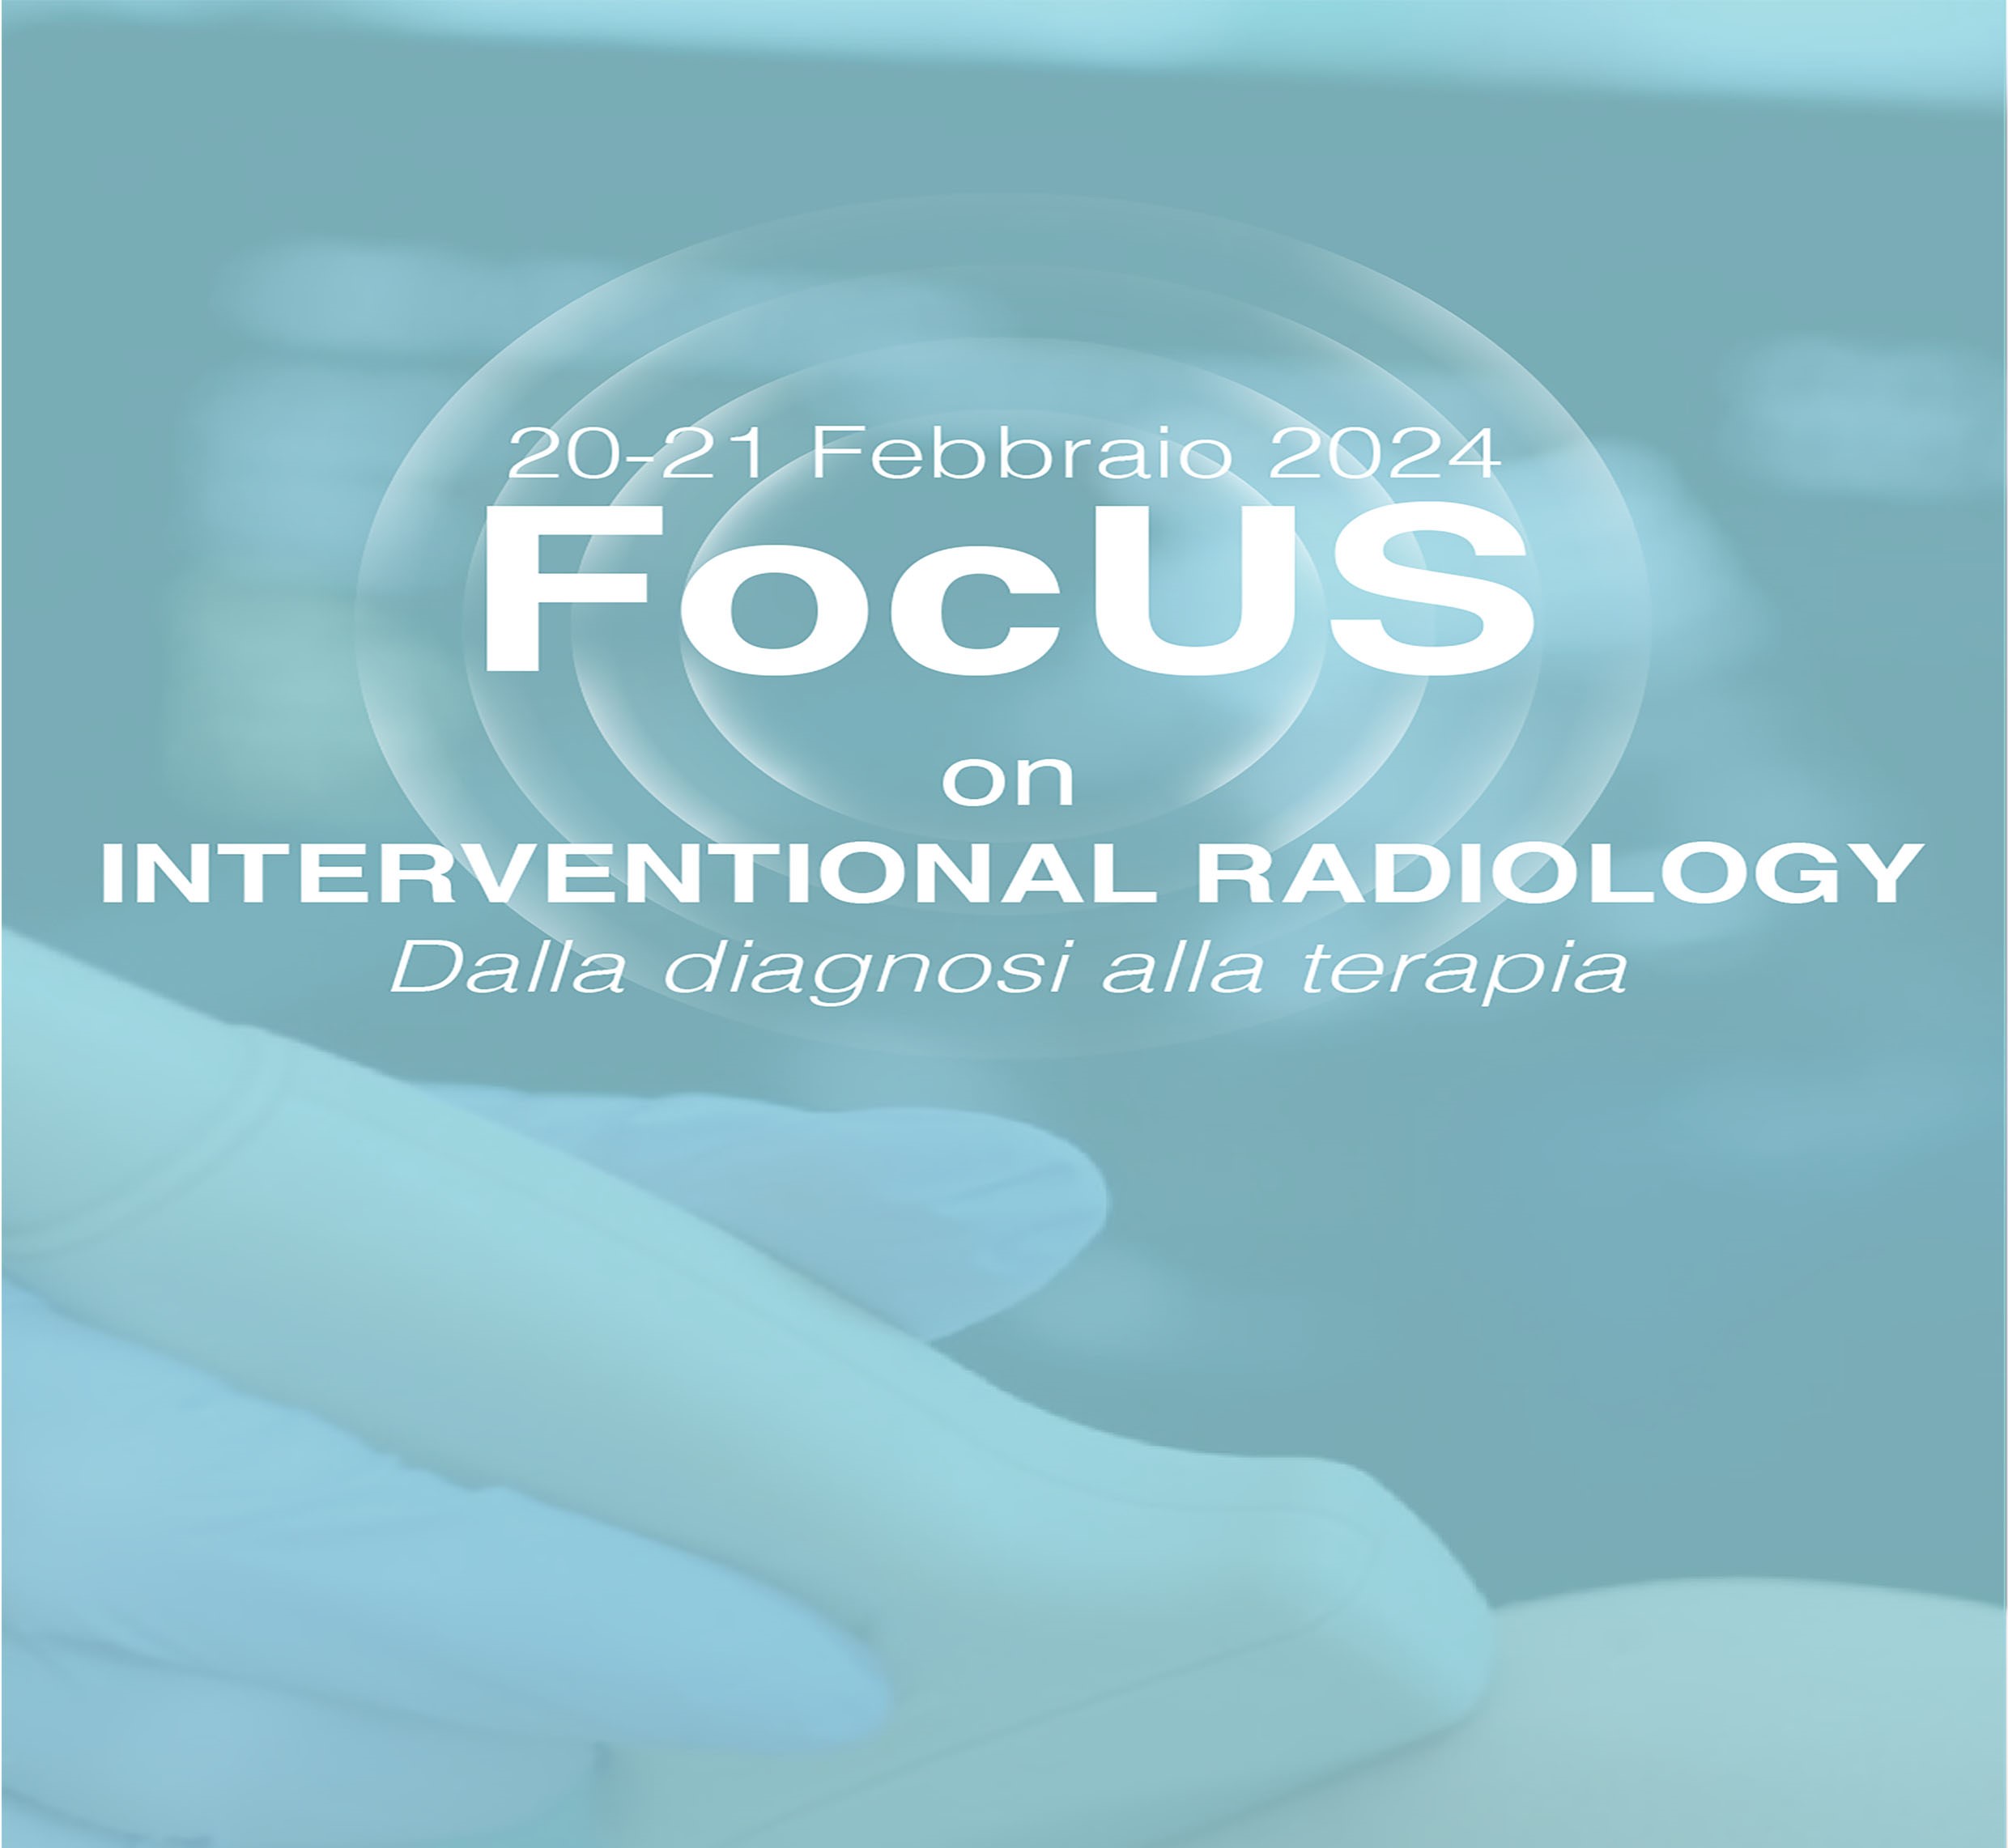 Focus on Interventional Radiology - 20/21 febbraio 2024